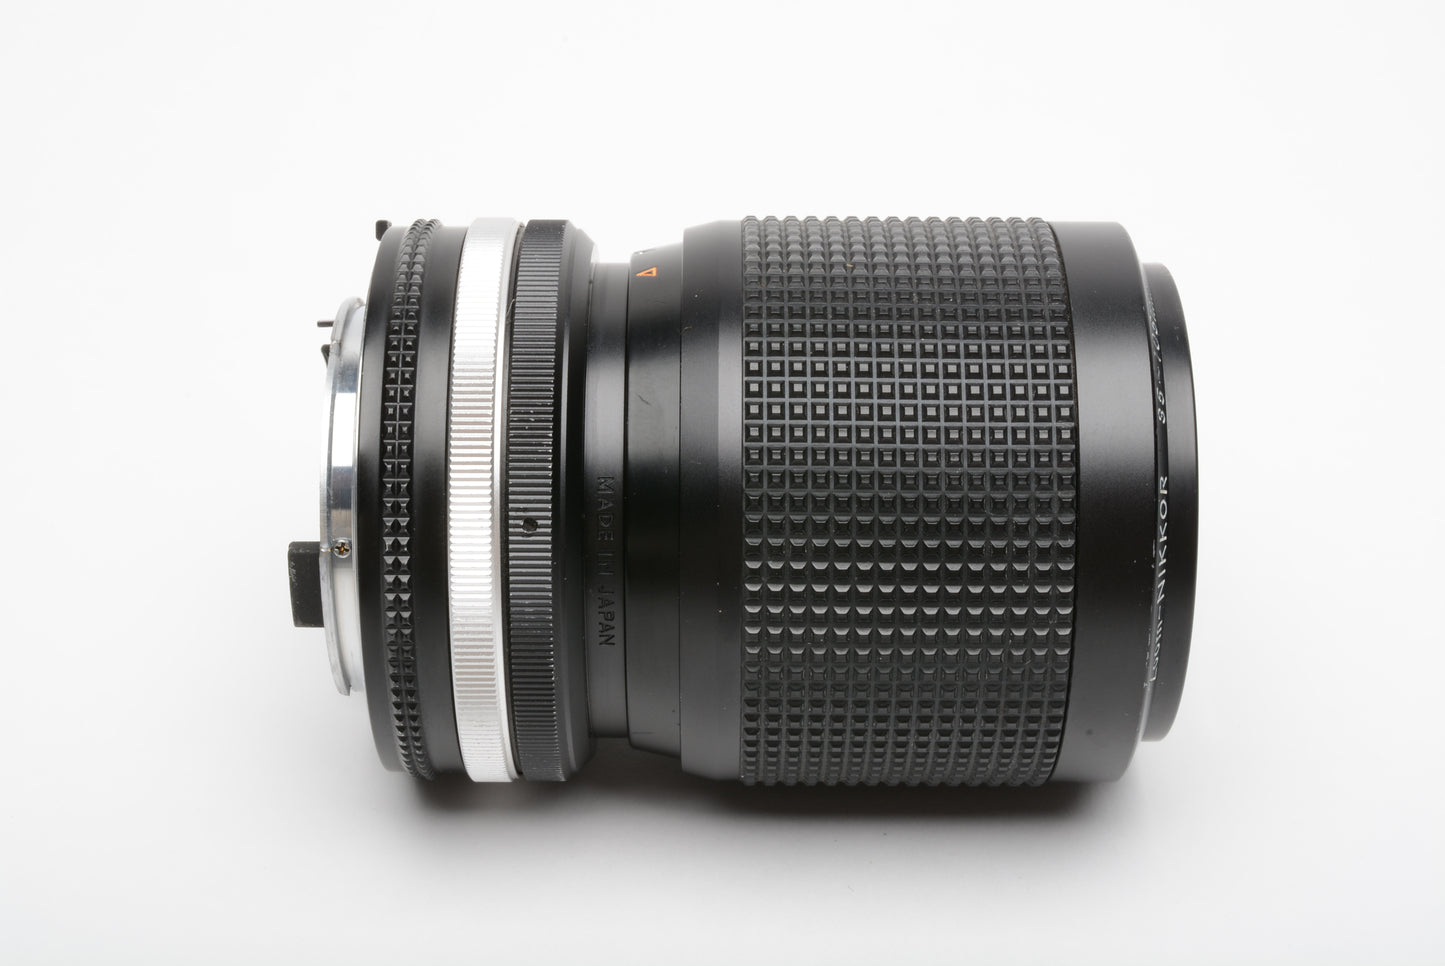 Nikon Nikkor 35-105mm f3.5-4.5 macro zoom lens w/caps, nice, clean, compact